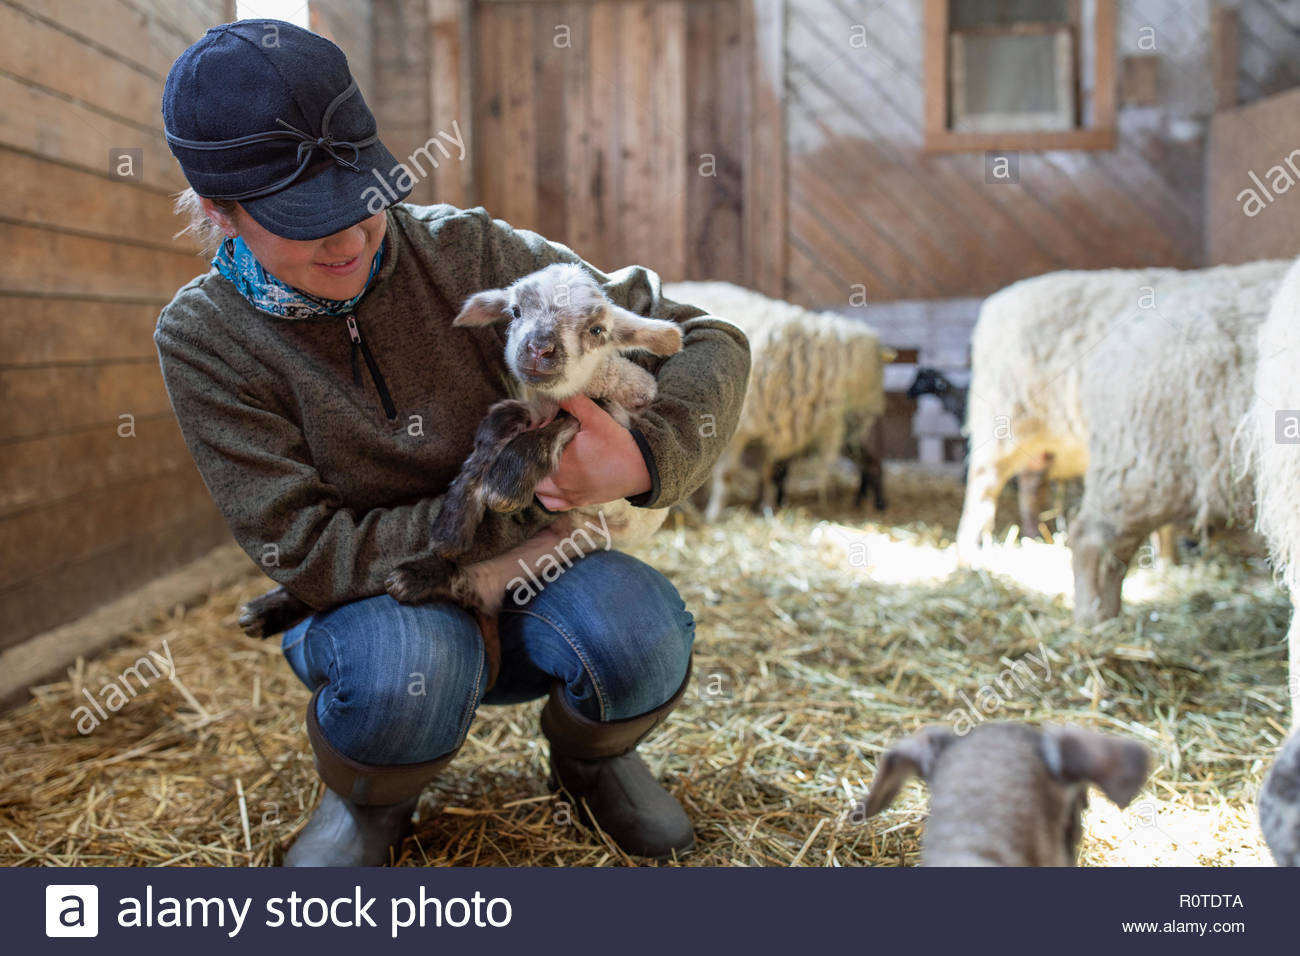 Female farmer holding baby lamb in barn Stock Photo